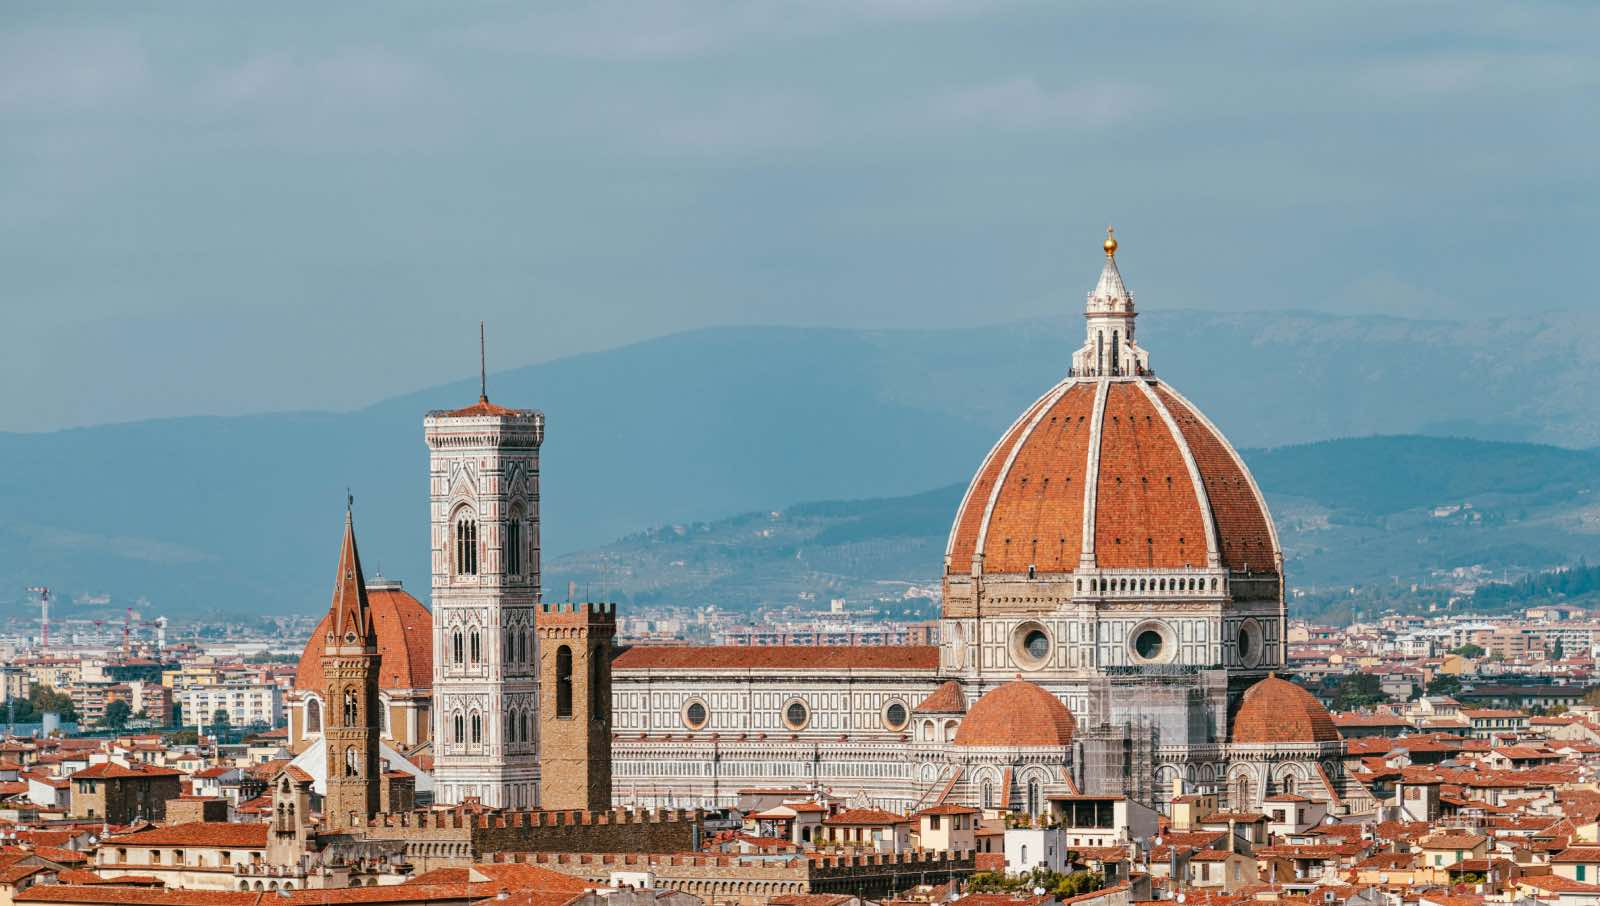 Santa María del Fiore duomo de florencia, cúpula, brunelleschi, arquitectura renacentista